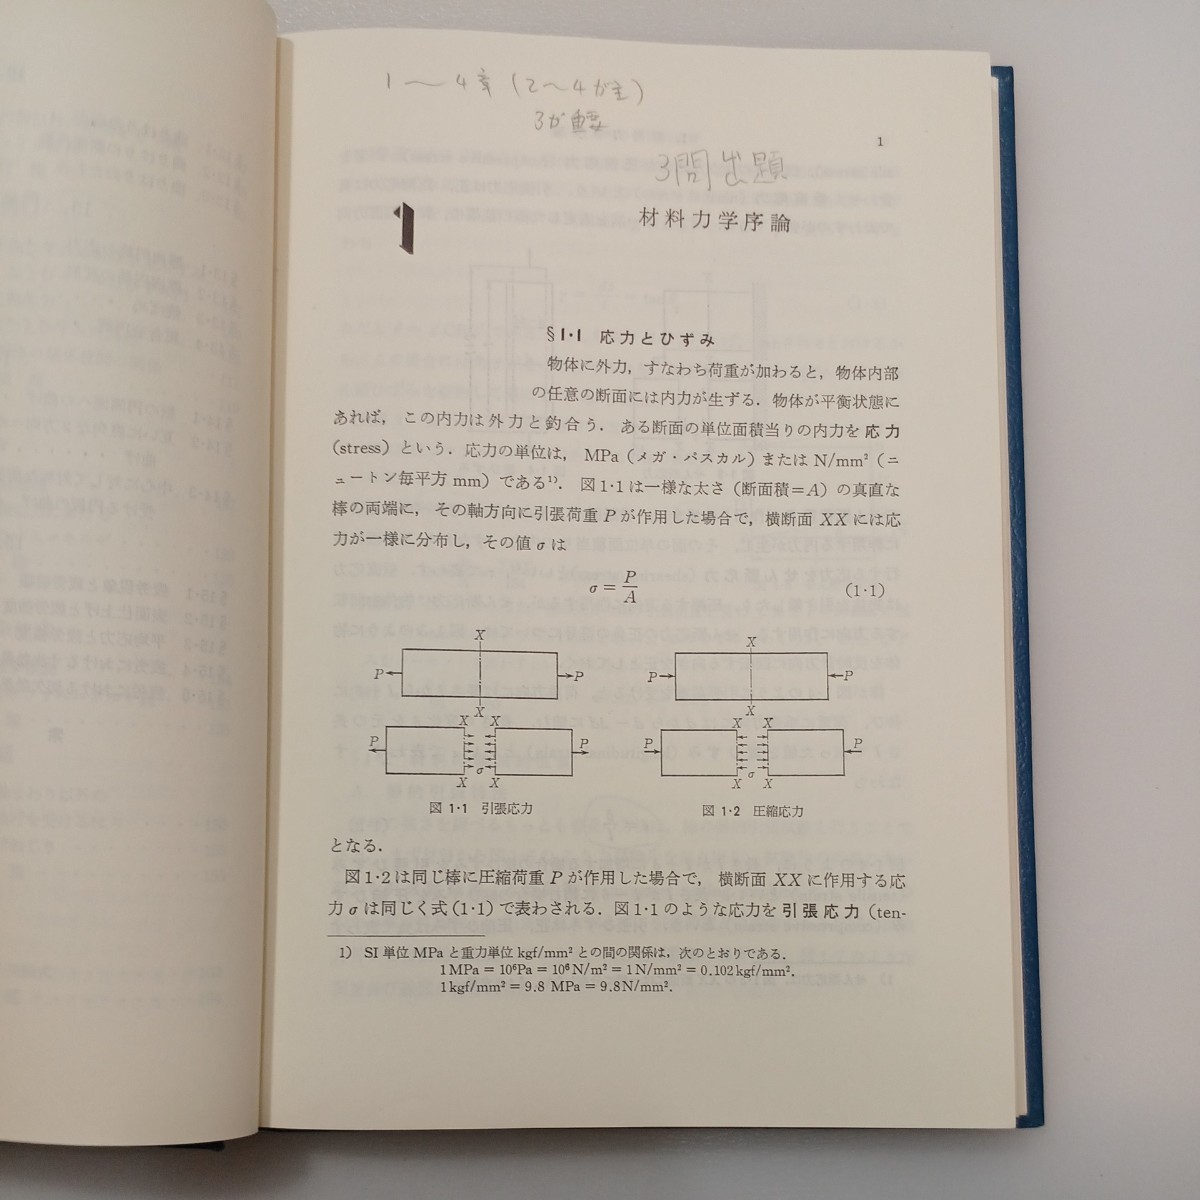 zaa-537♪材料力学(改訂版): 基礎と強度設計 (技術シリーズ 3) 単行本 川田 雄一 (著)　裳華房 26版 (1992/2/20)